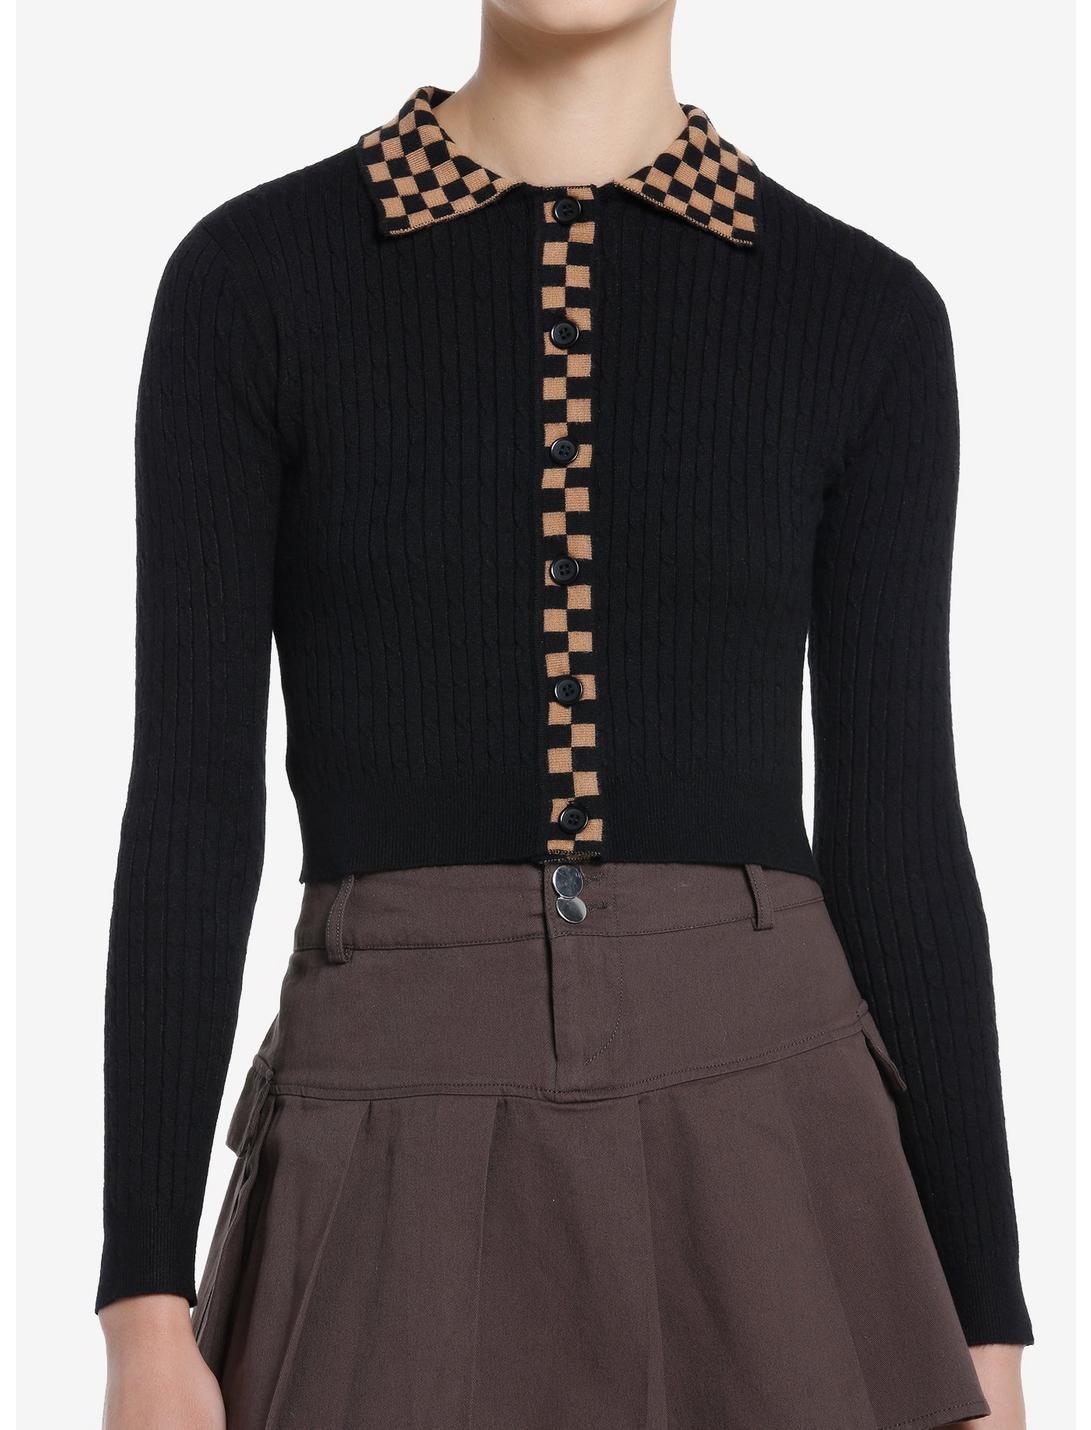 Social Collision Brown & Black Checkered Knit Girls Long-Sleeve Top, BROWN, hi-res